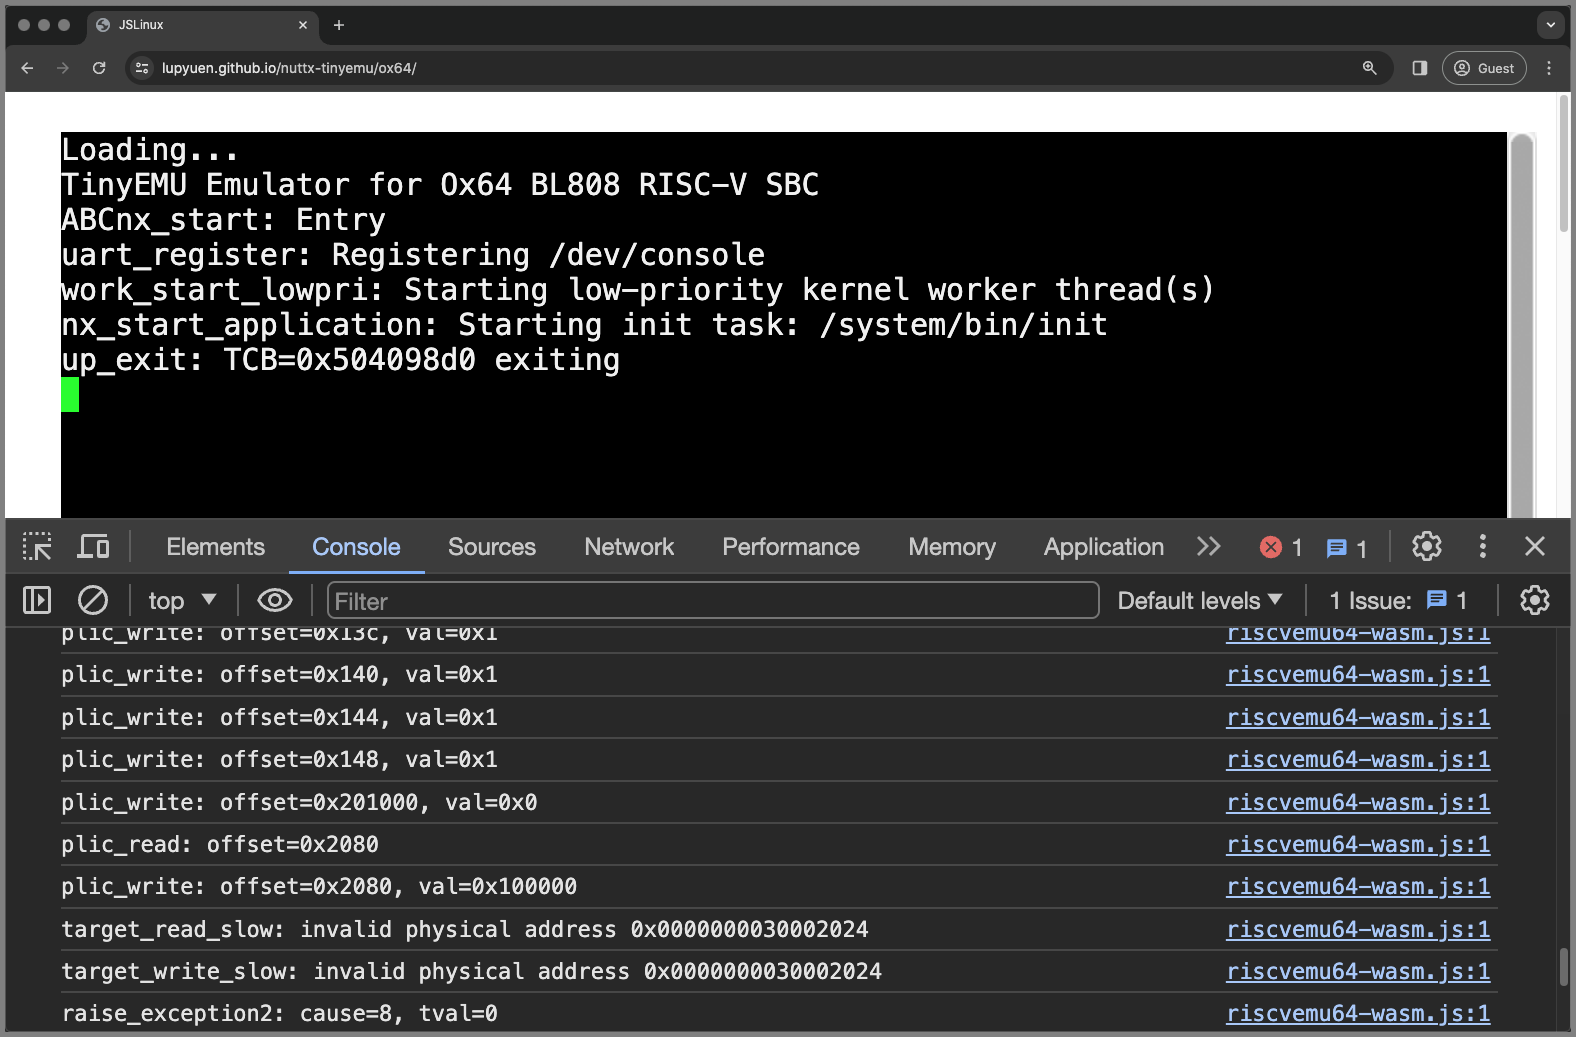 JavaScript Console of Ox64 BL808 Emulator